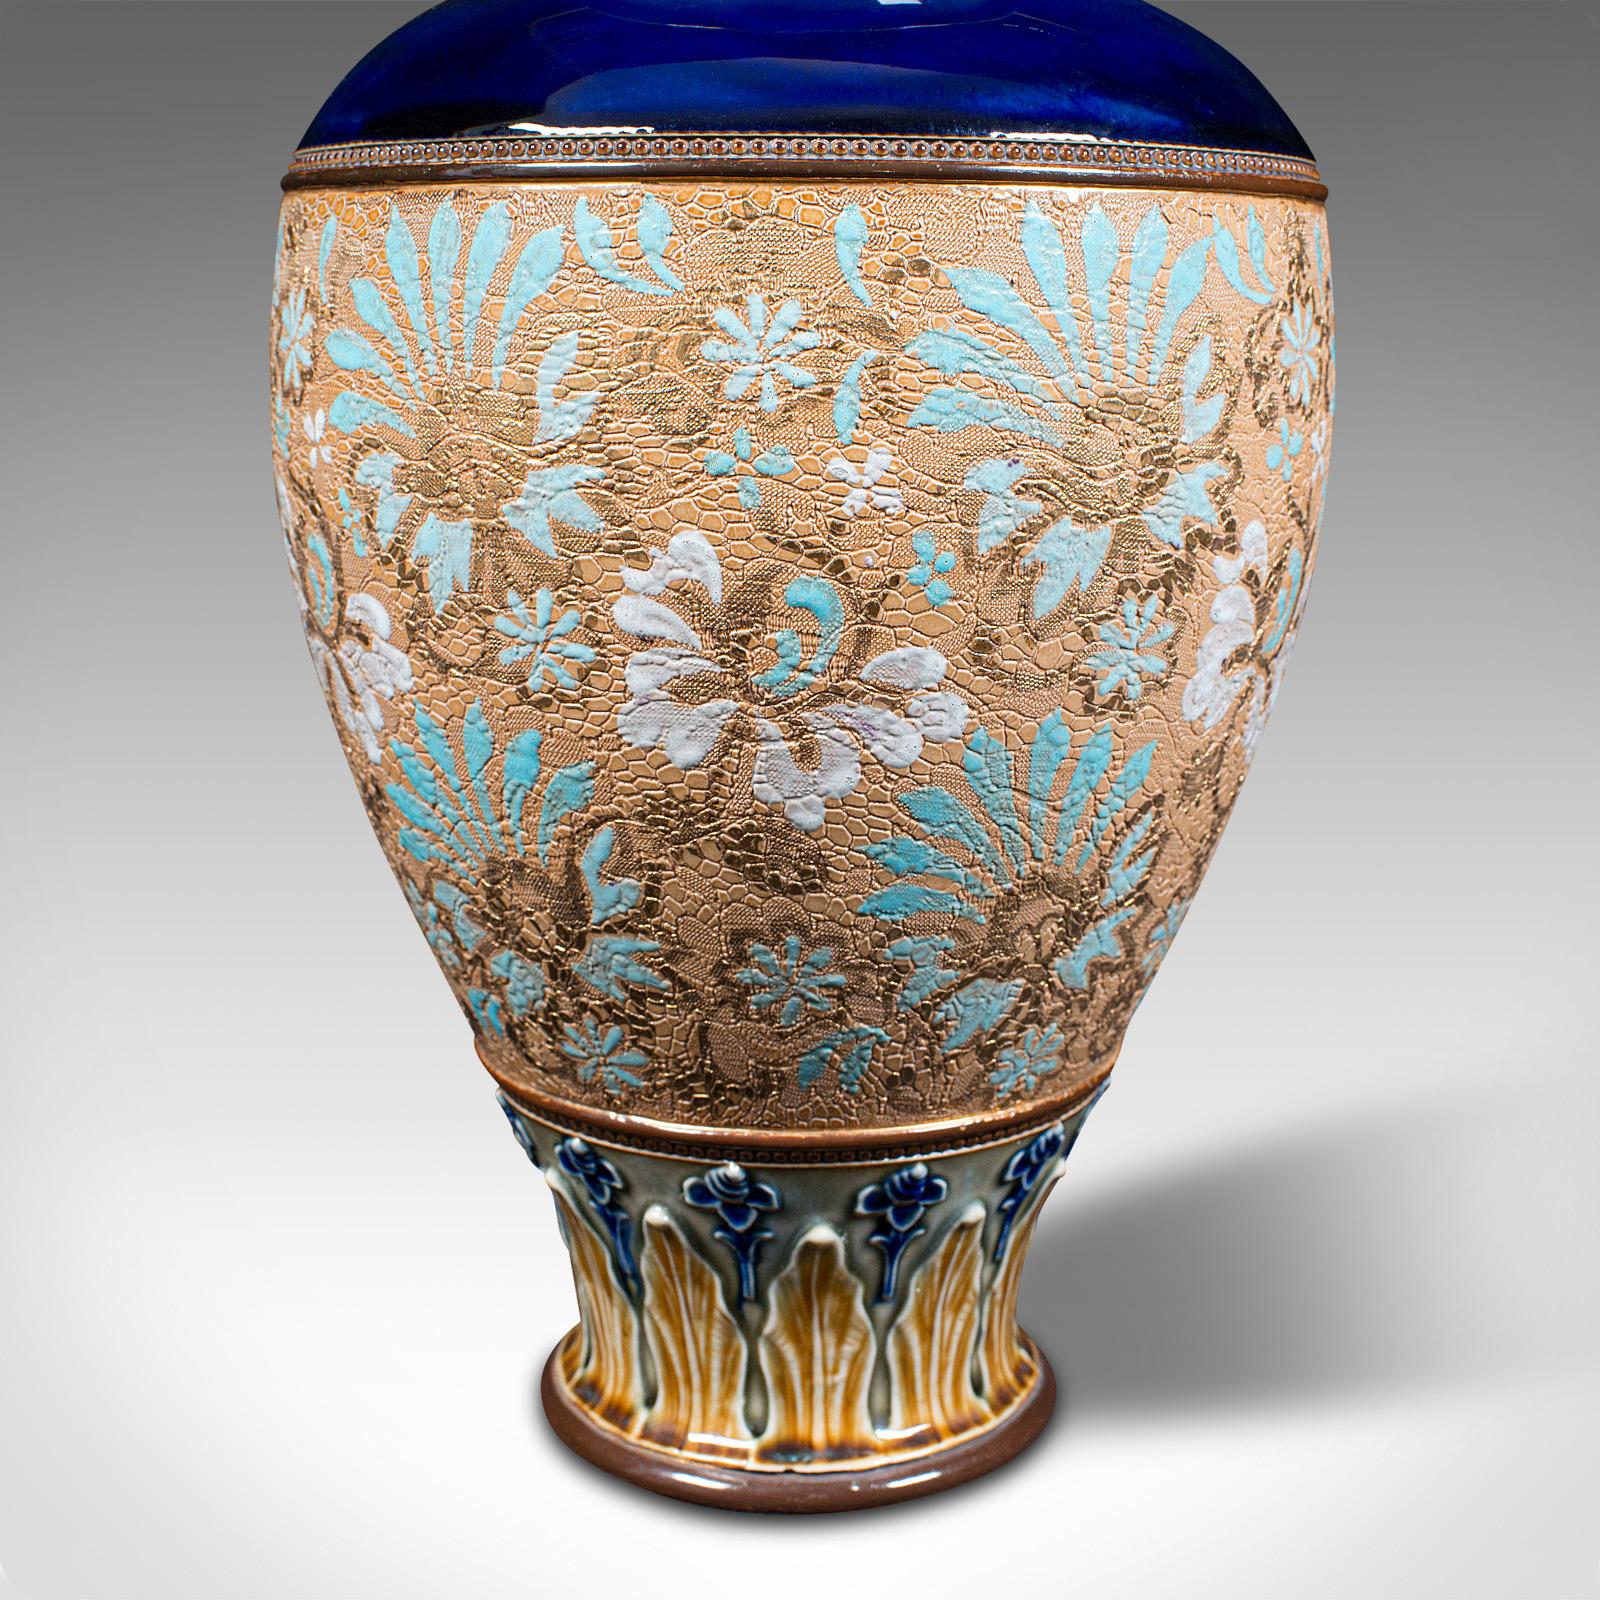 Antique Decorative Vase, English, Ceramic, Display, Art Nouveau, Edwardian, 1910 2